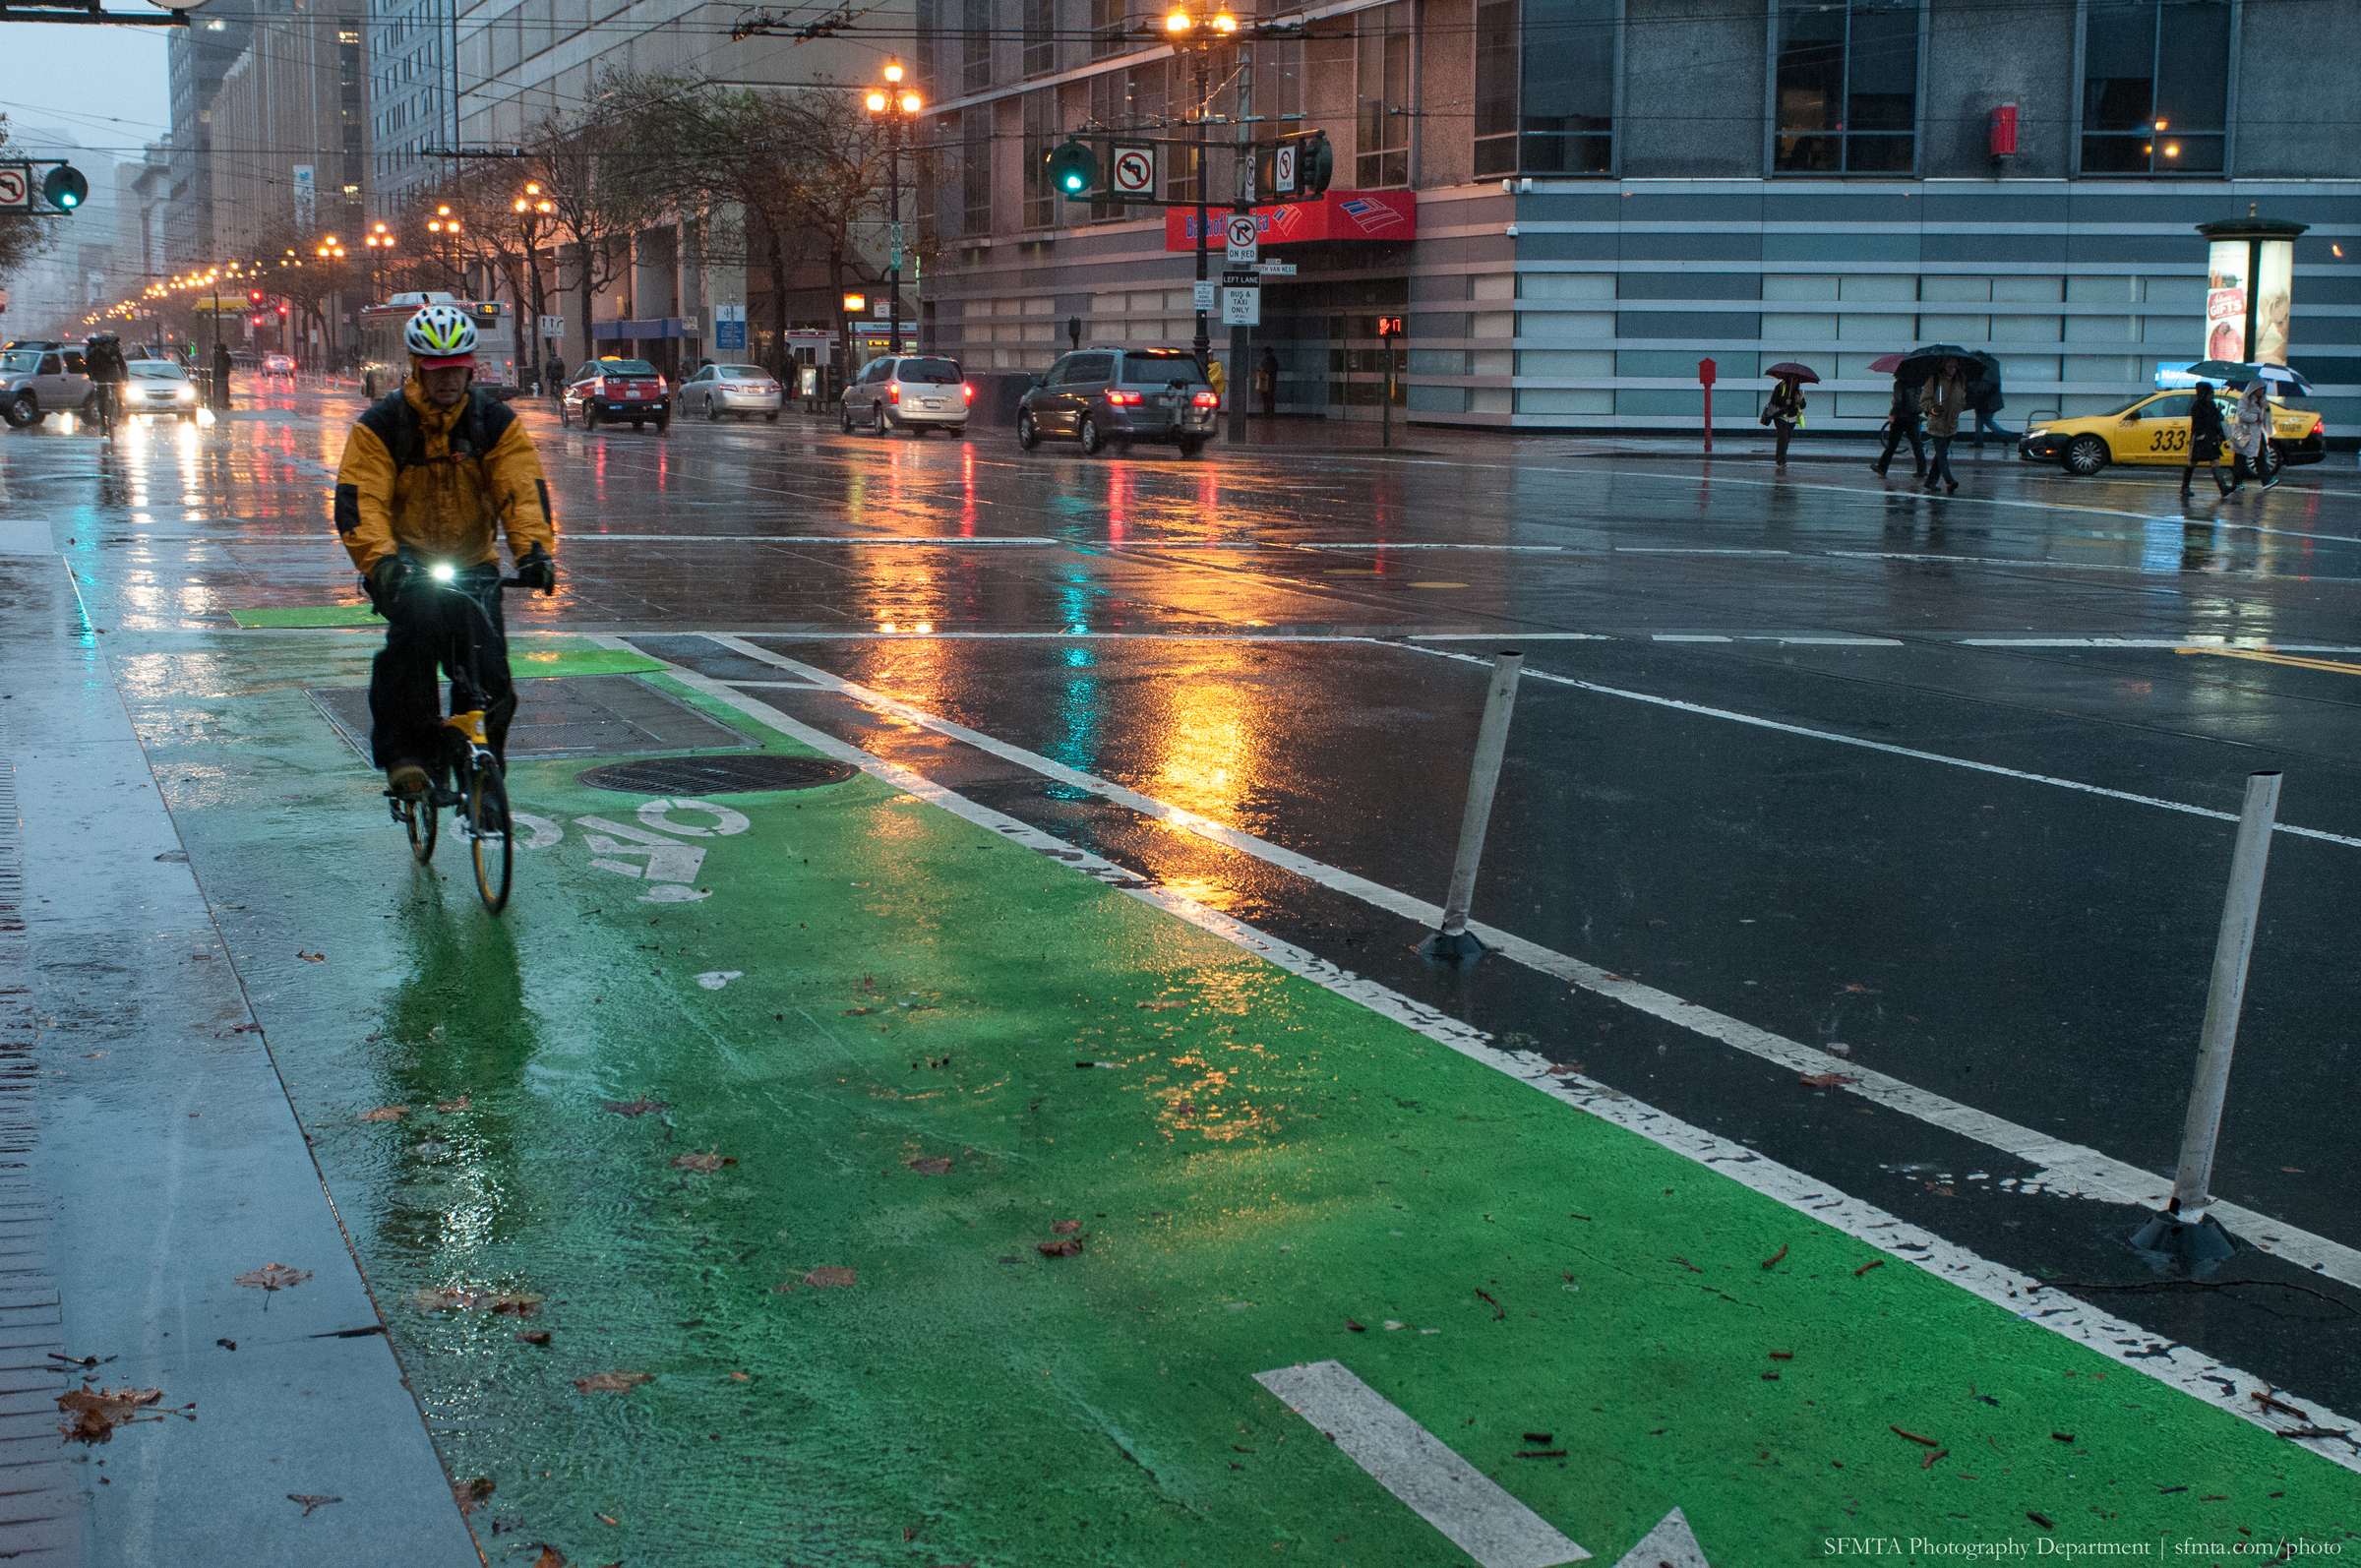 Market Street green bike lane in the rain